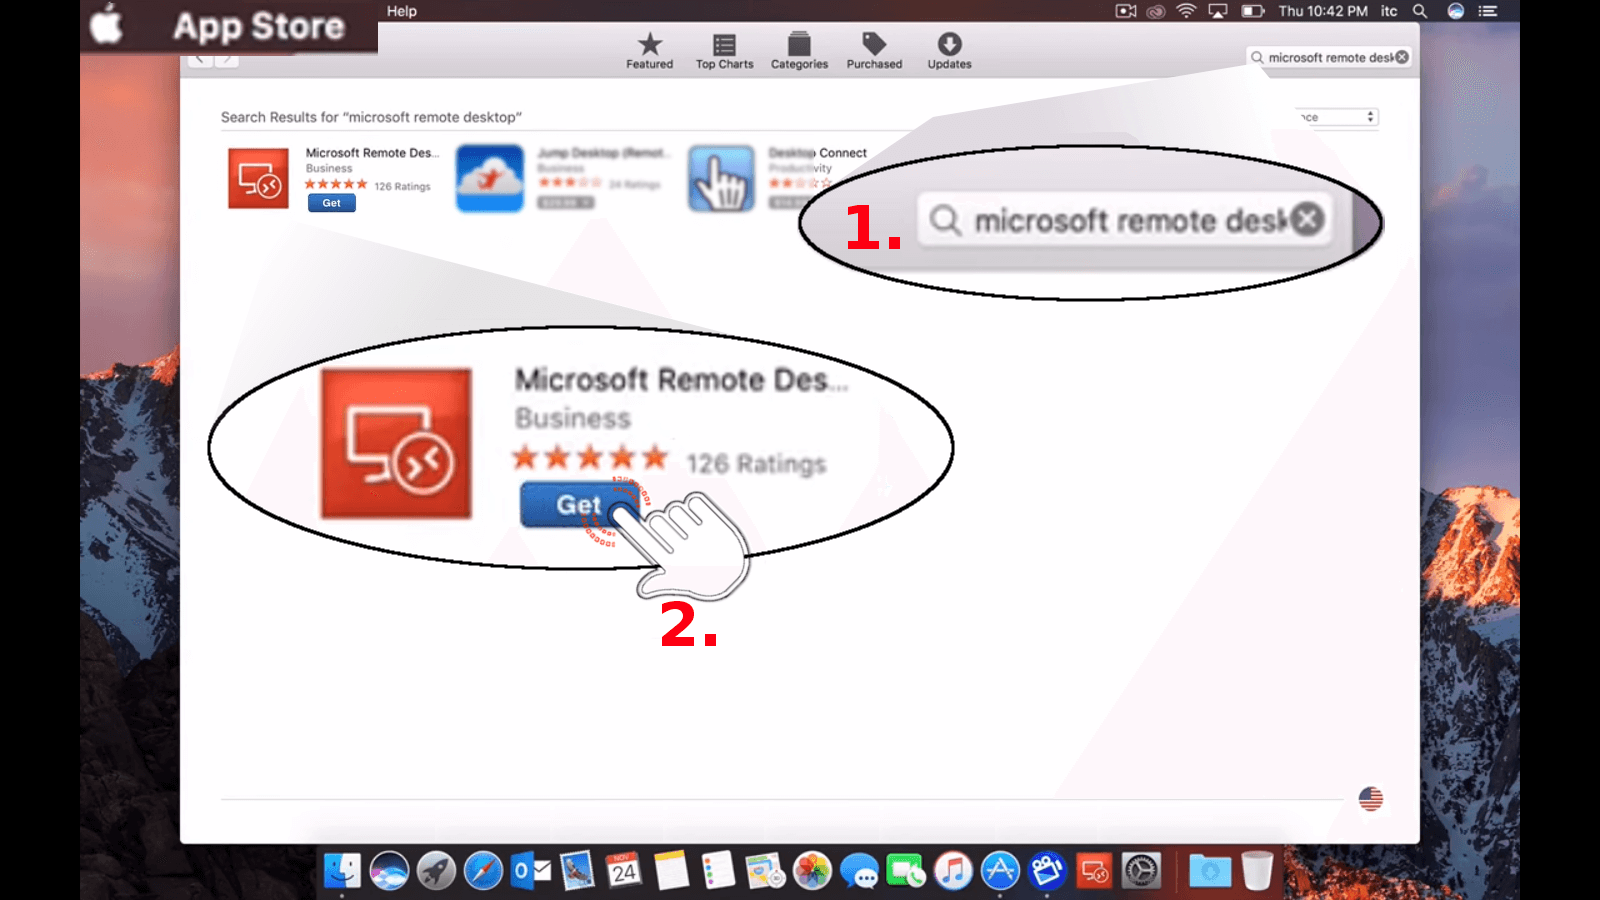 Microsoft Remote Desktop software at Apple App Store